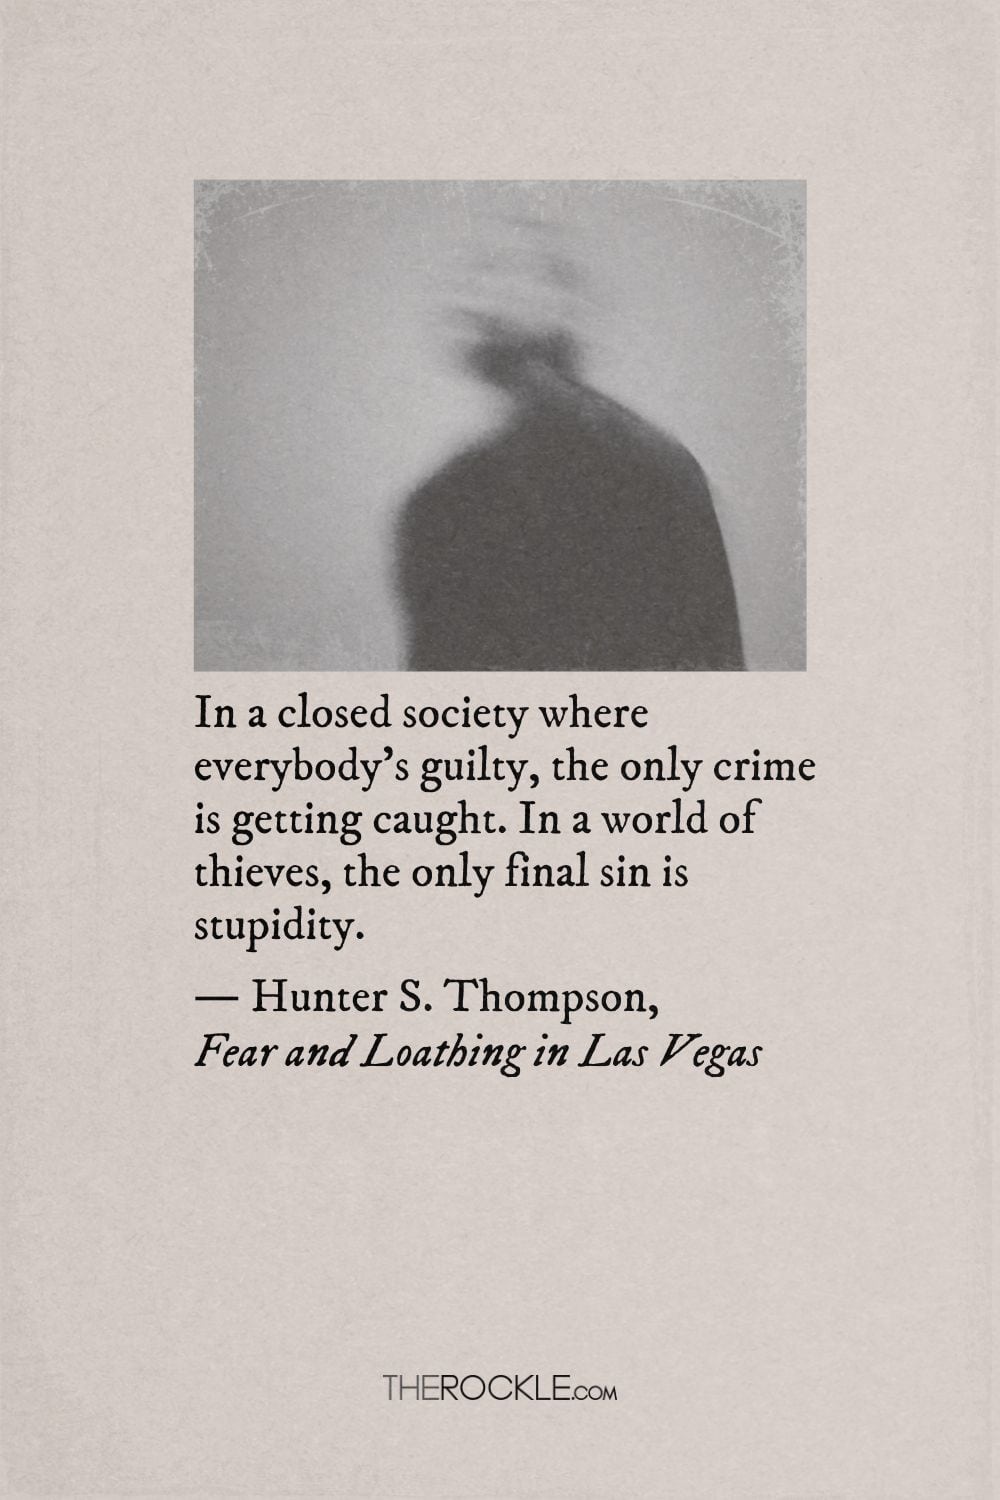 Thompson on society and stupidity